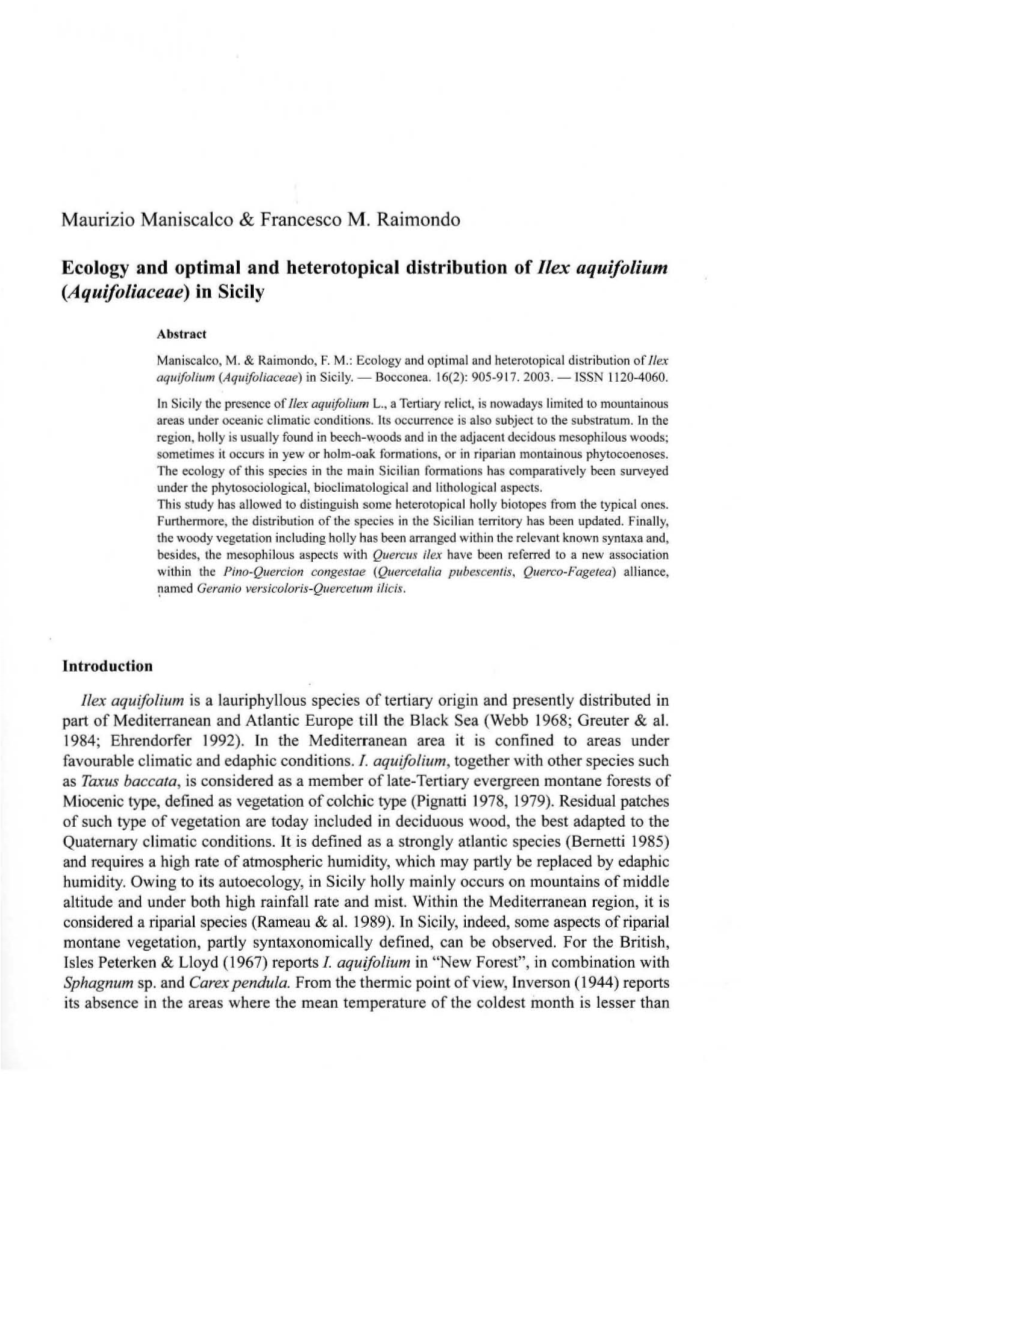 Maurizio Maniscalco & Francesco M. Raimondo Ecology and Optimal And